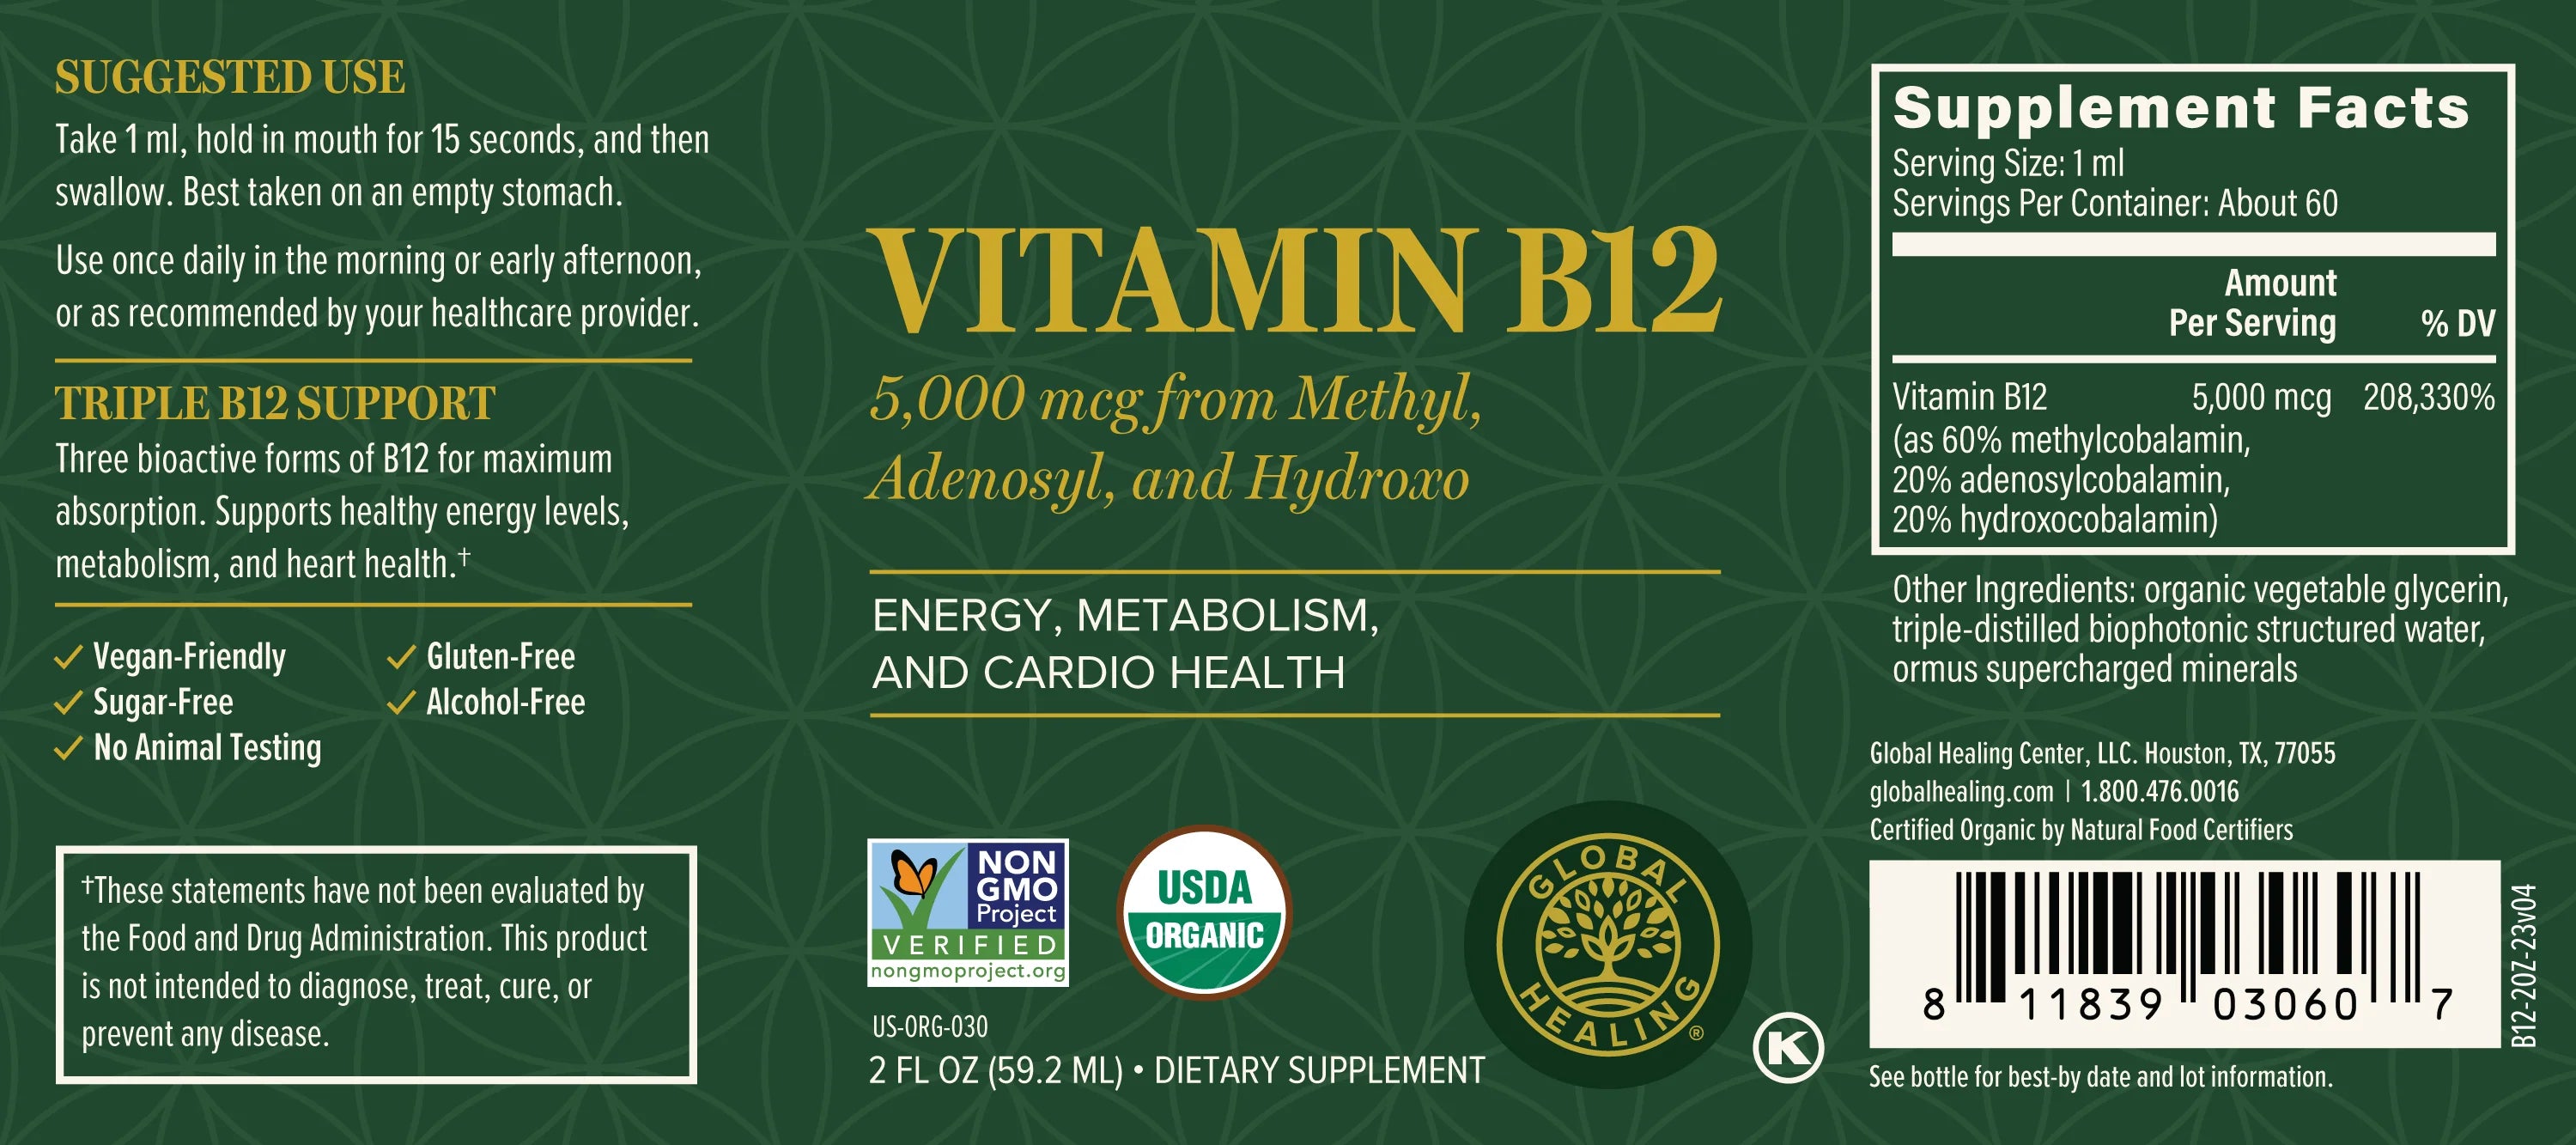 Vitamin B12 Bottle Label